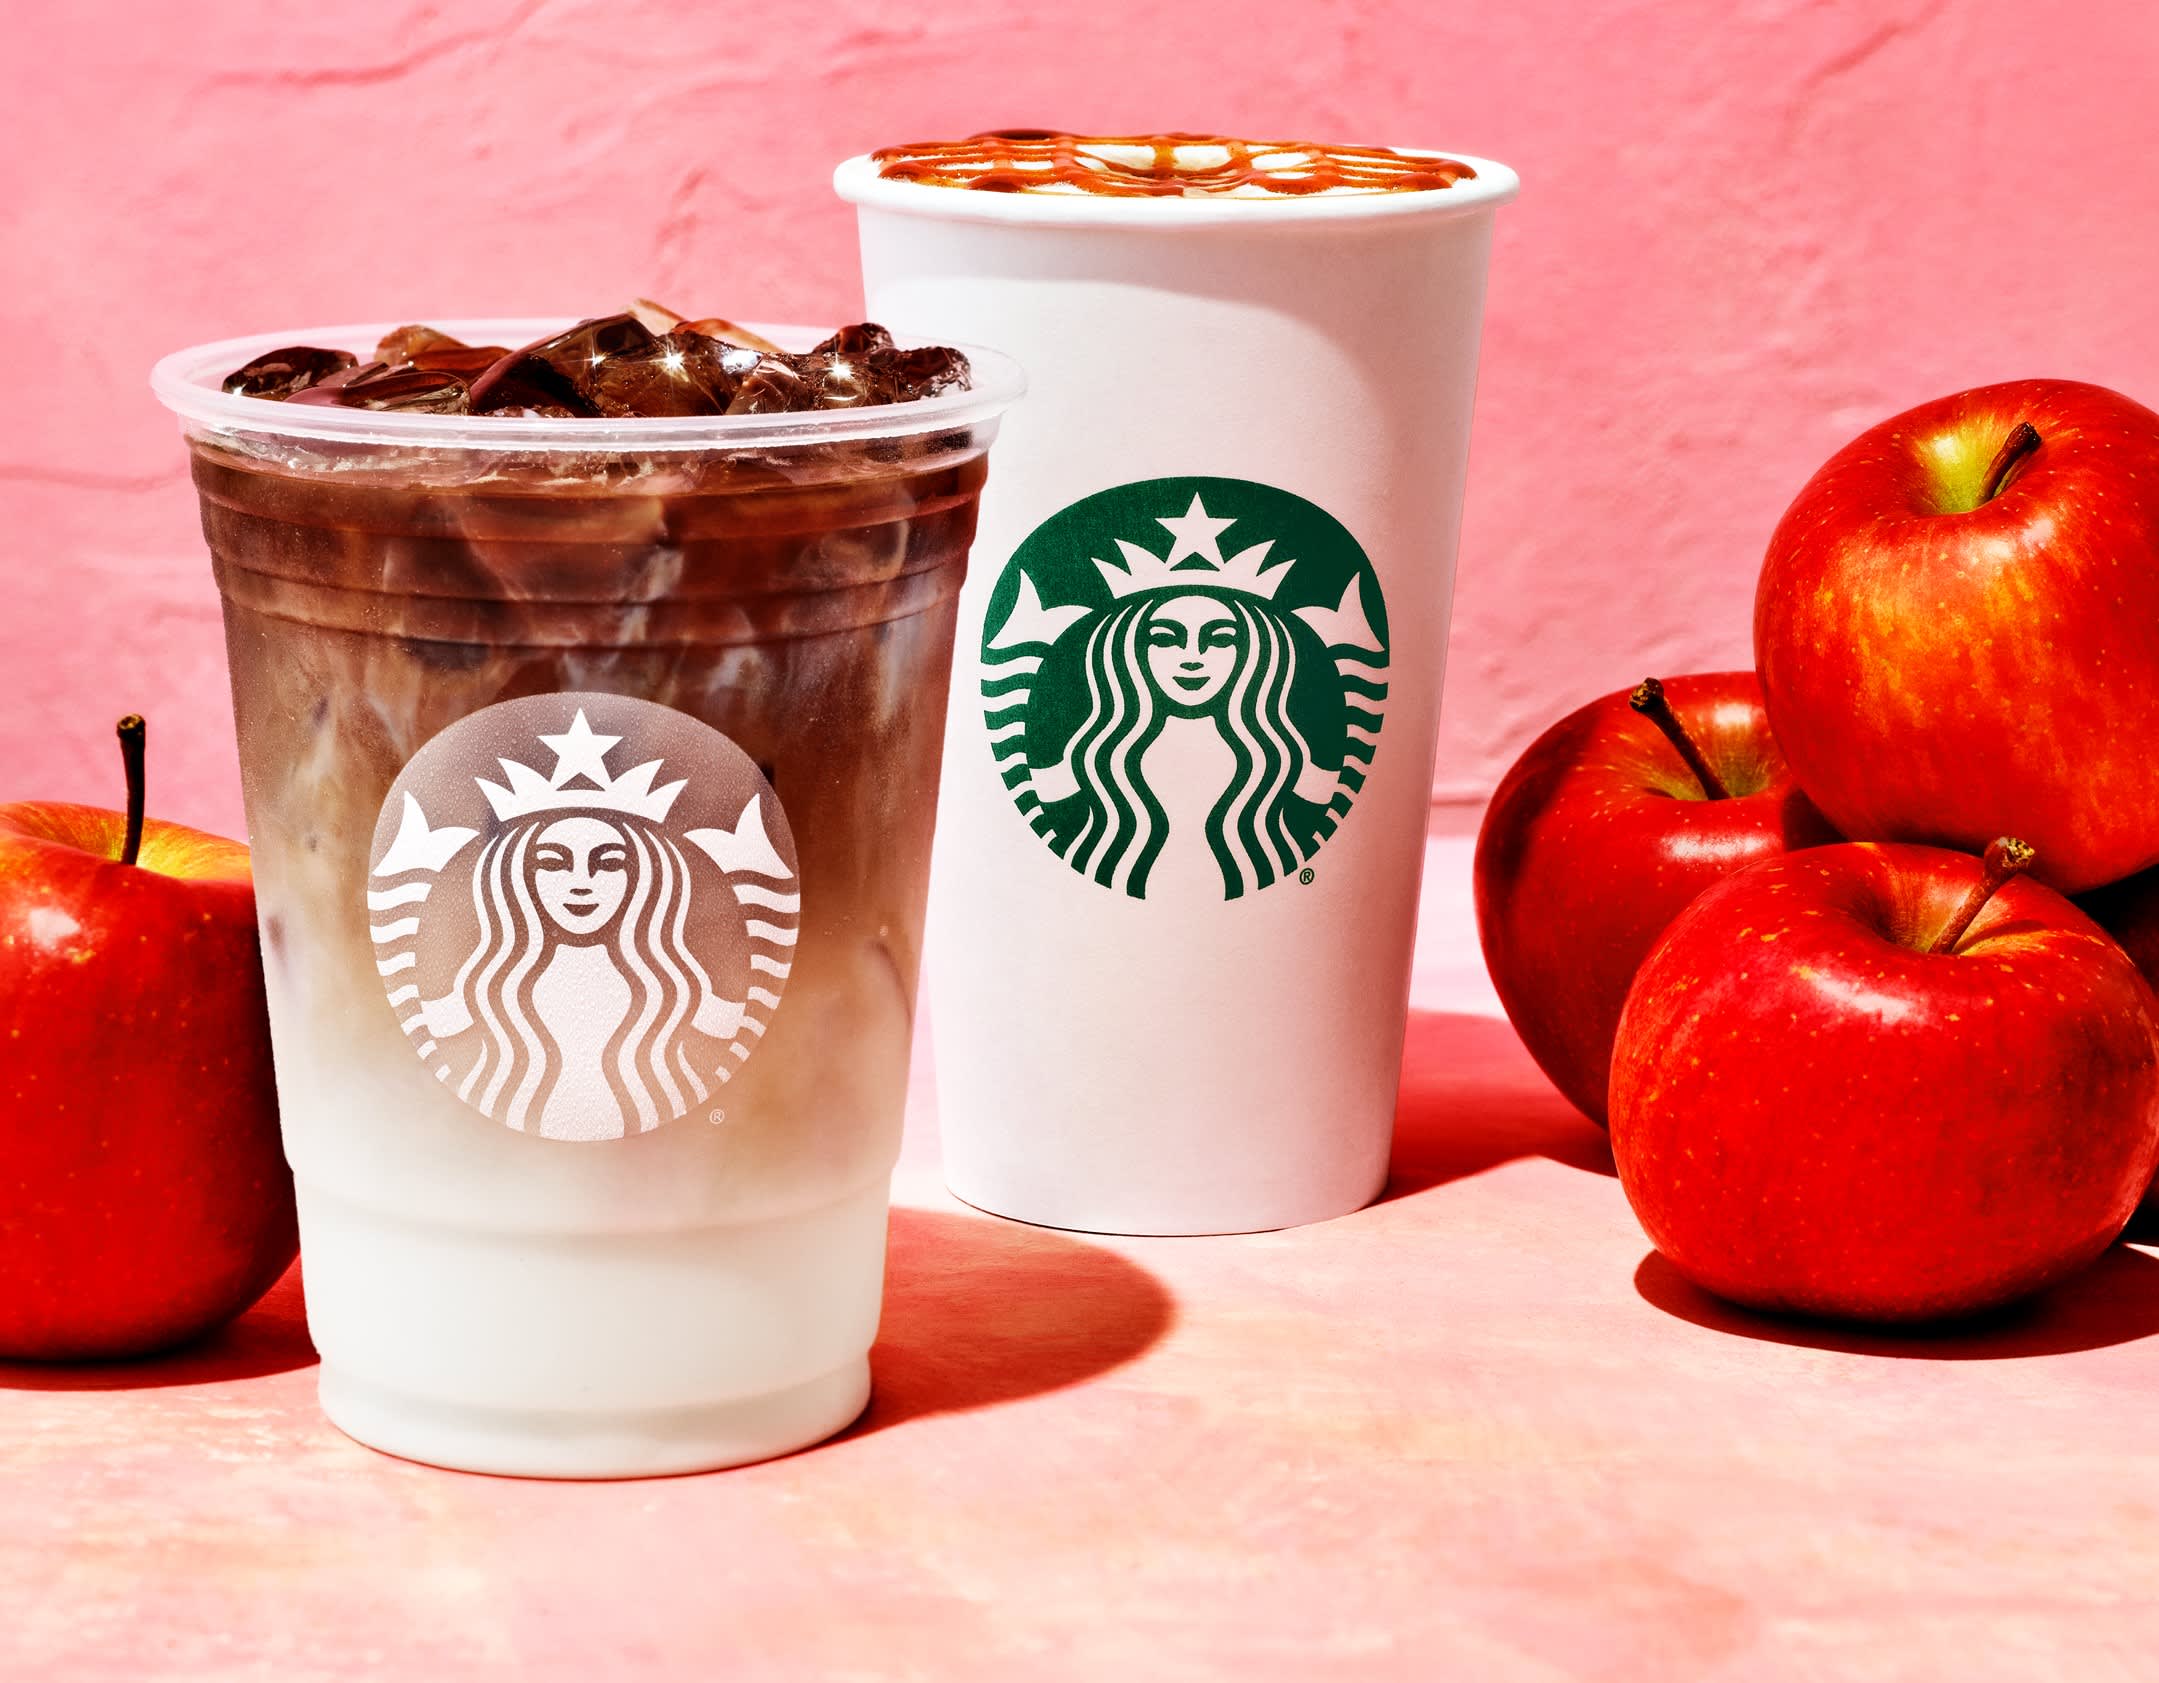 Starbucks' new apple crisp macchiato joins pumpkin spice latte on the fall menu